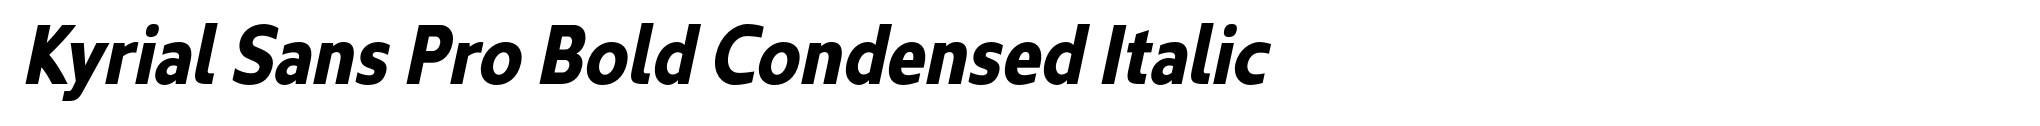 Kyrial Sans Pro Bold Condensed Italic image